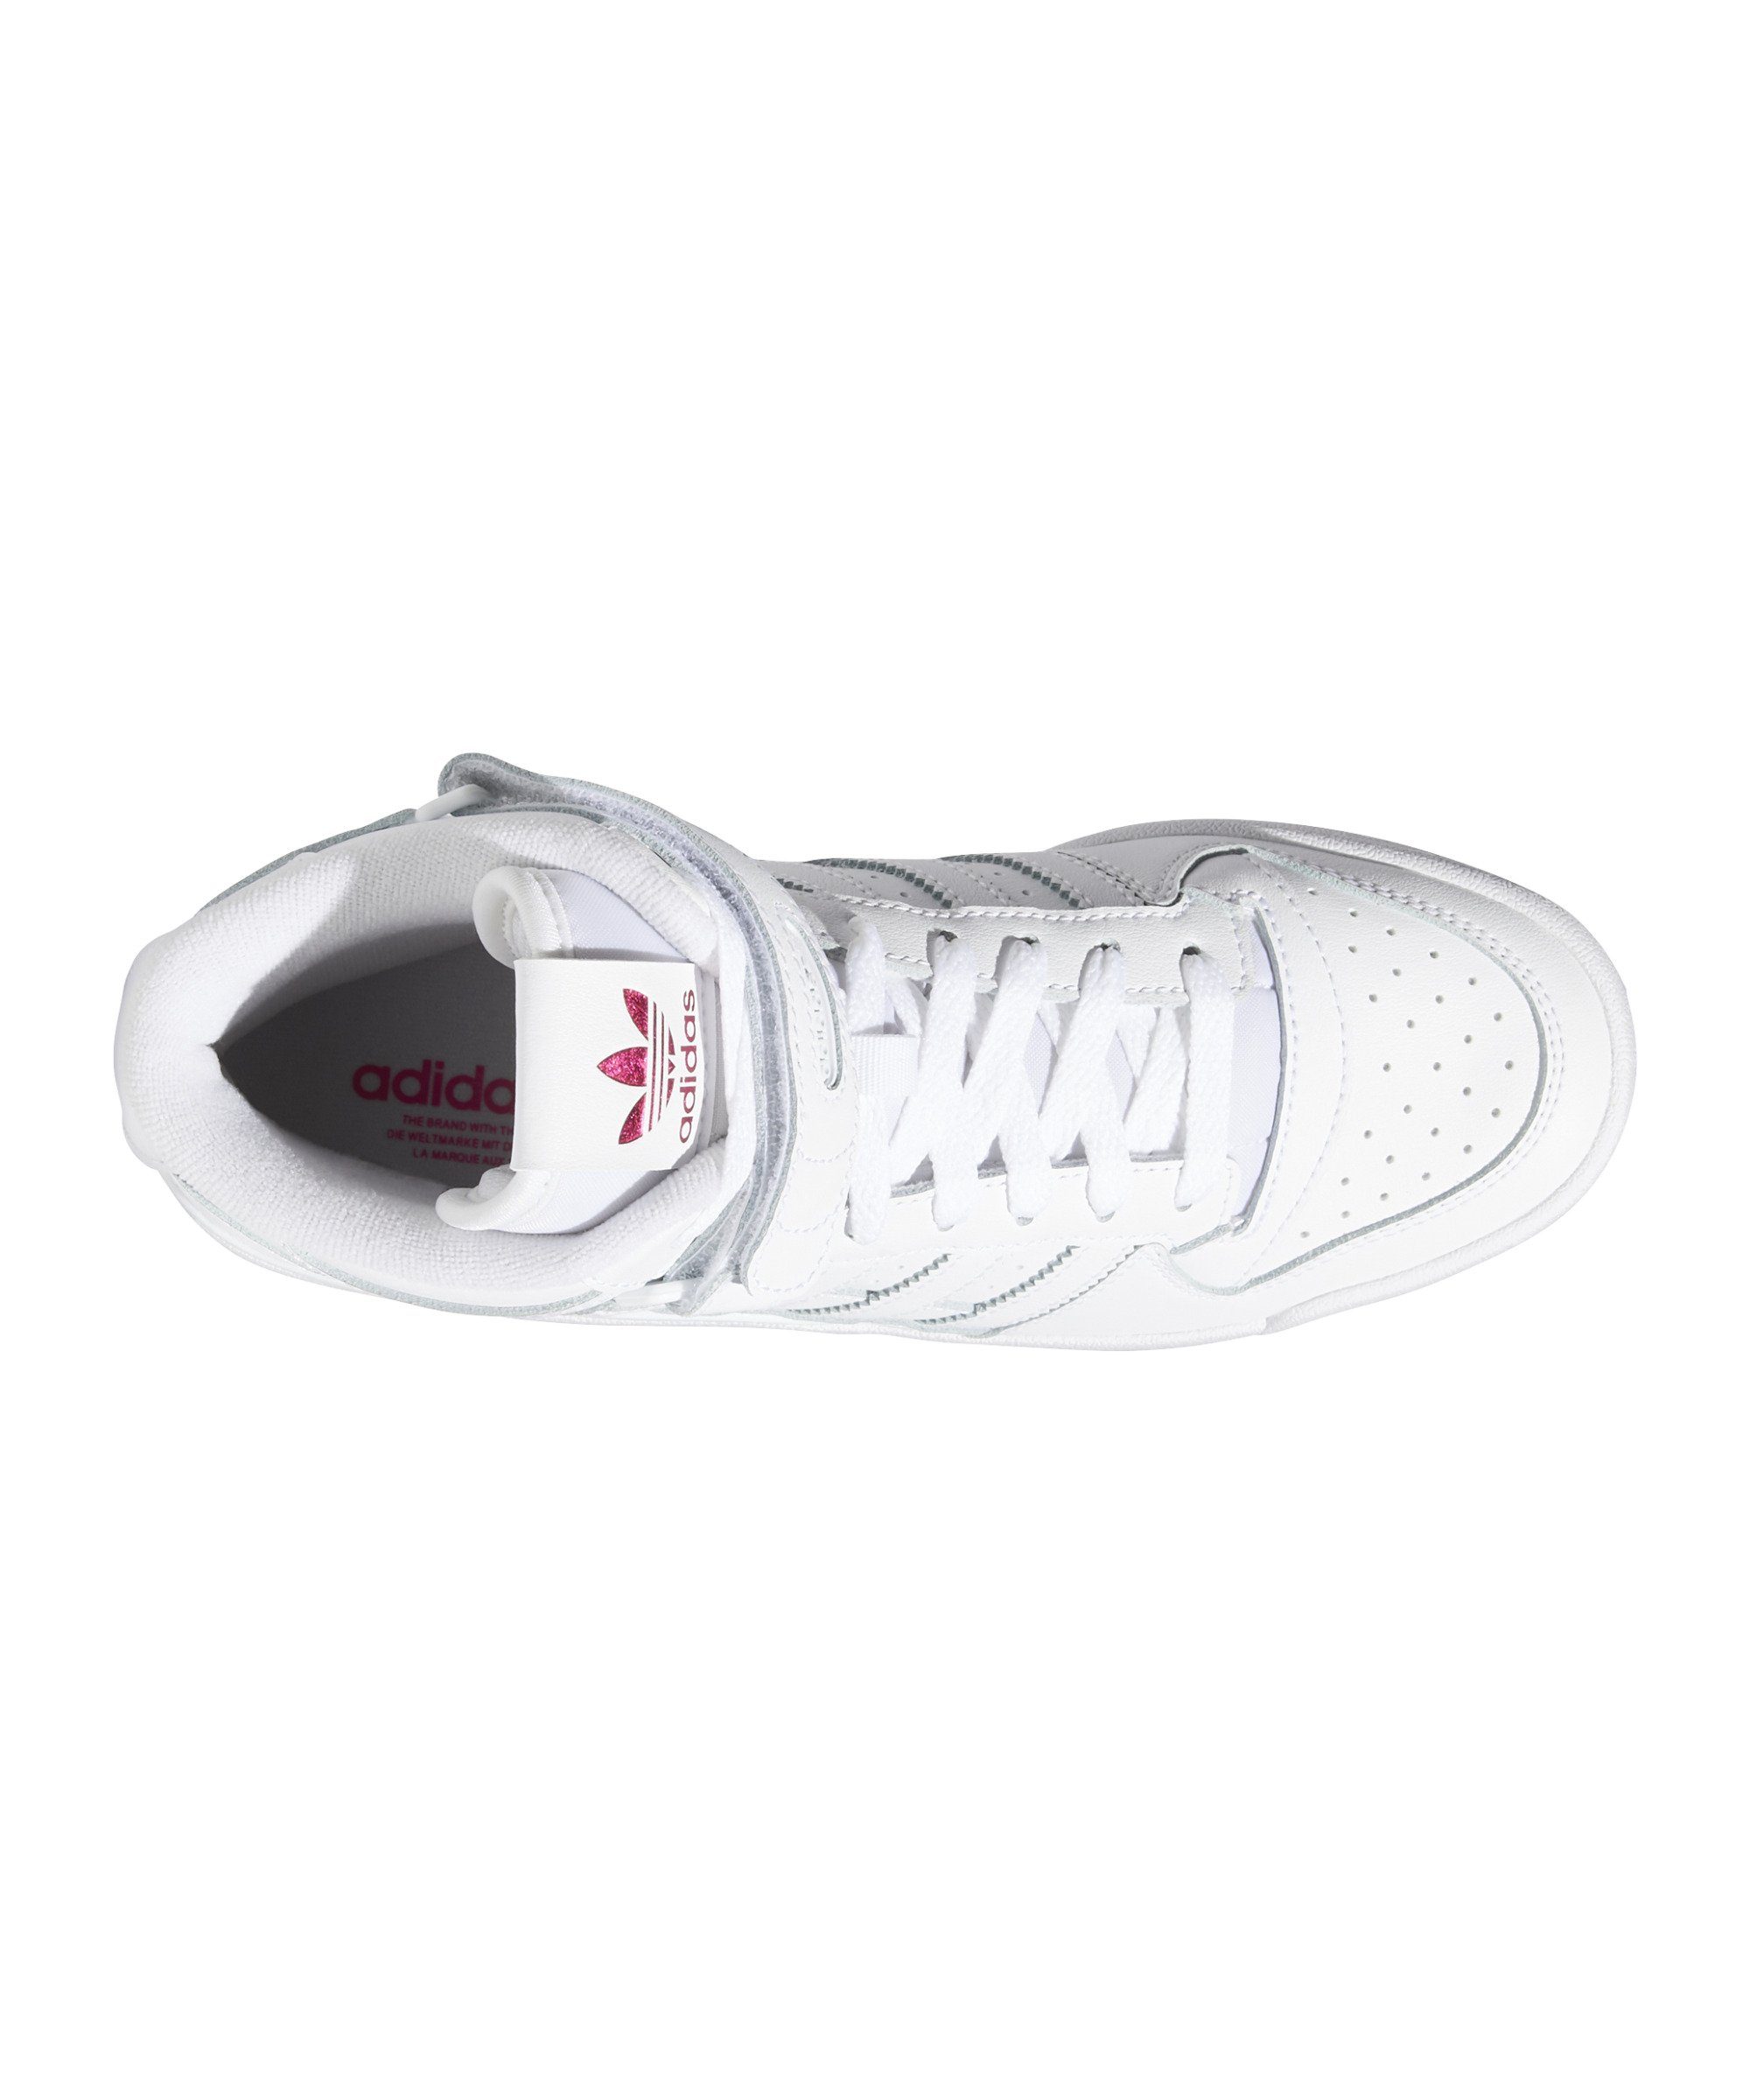 adidas Originals Damen Sneaker Mid Forum weisspink